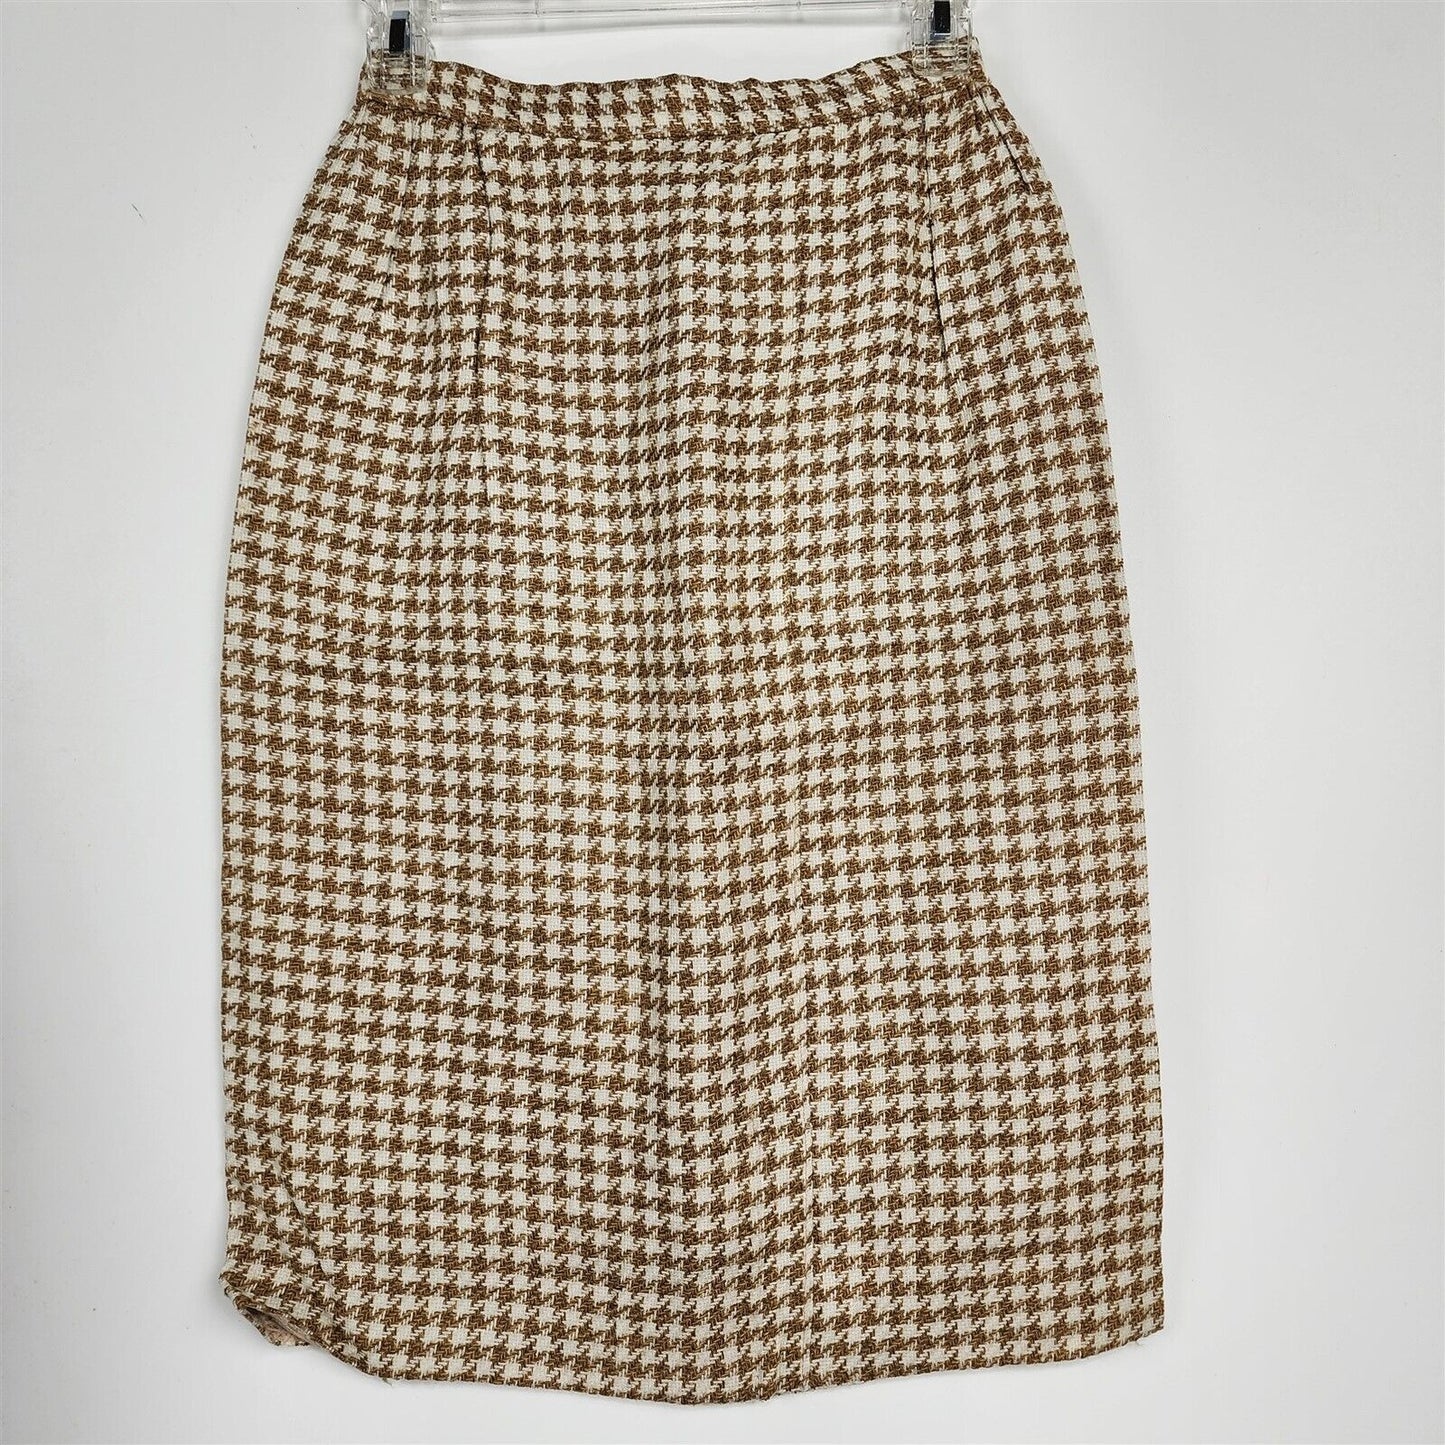 Vintage 1960s Frederick & Nelson Gold Houndstooth Jacket Skirt Suit Set